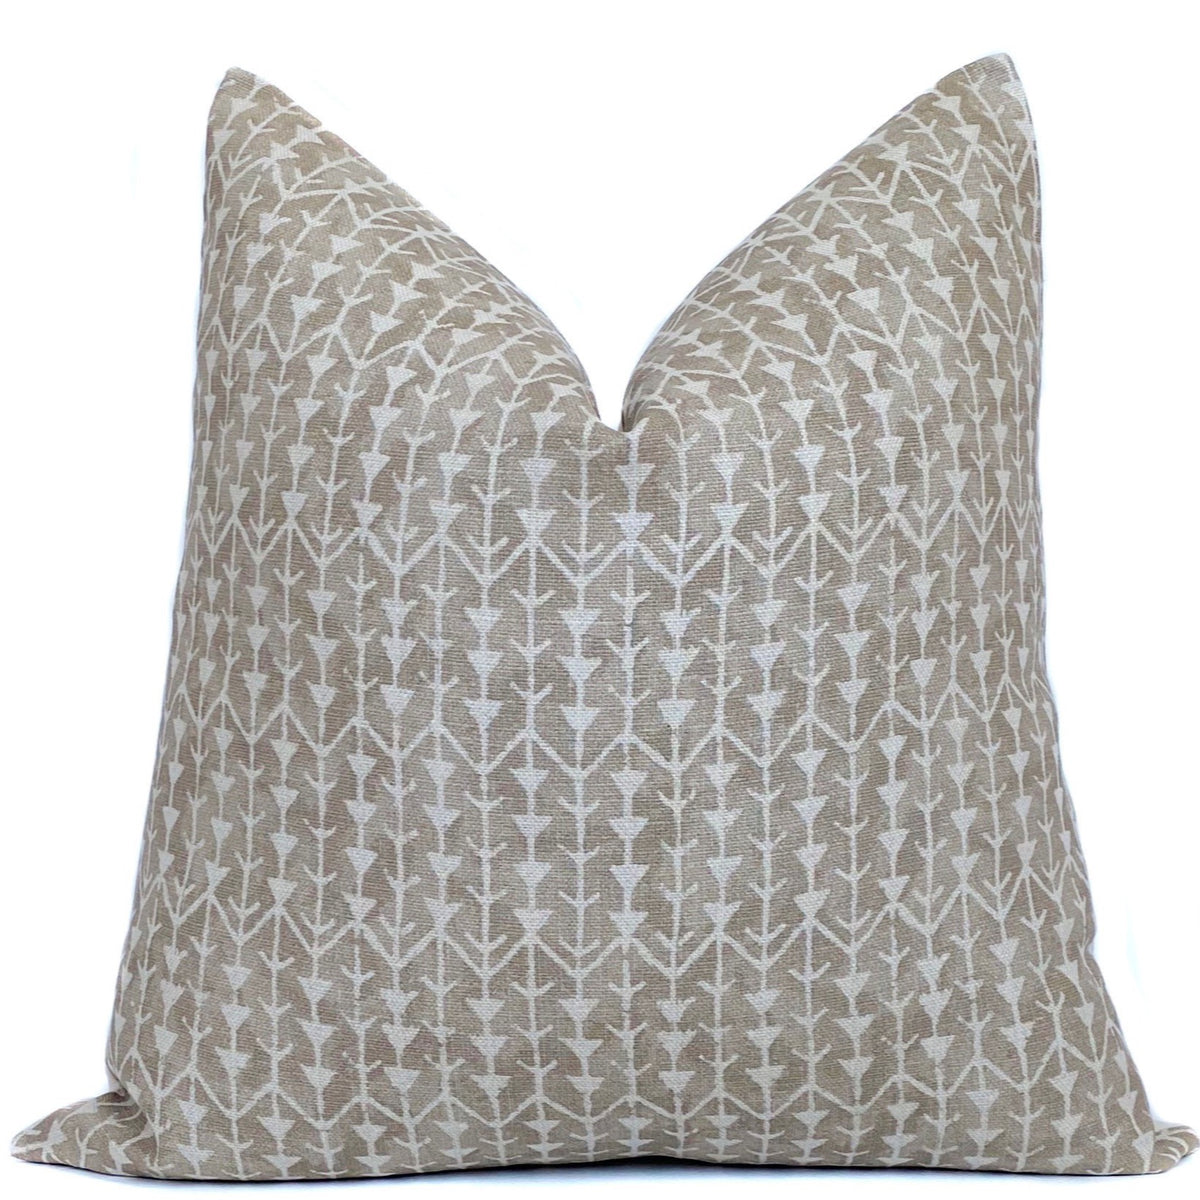 Carolina Irving Amazon Designer Pillow Cover in String 